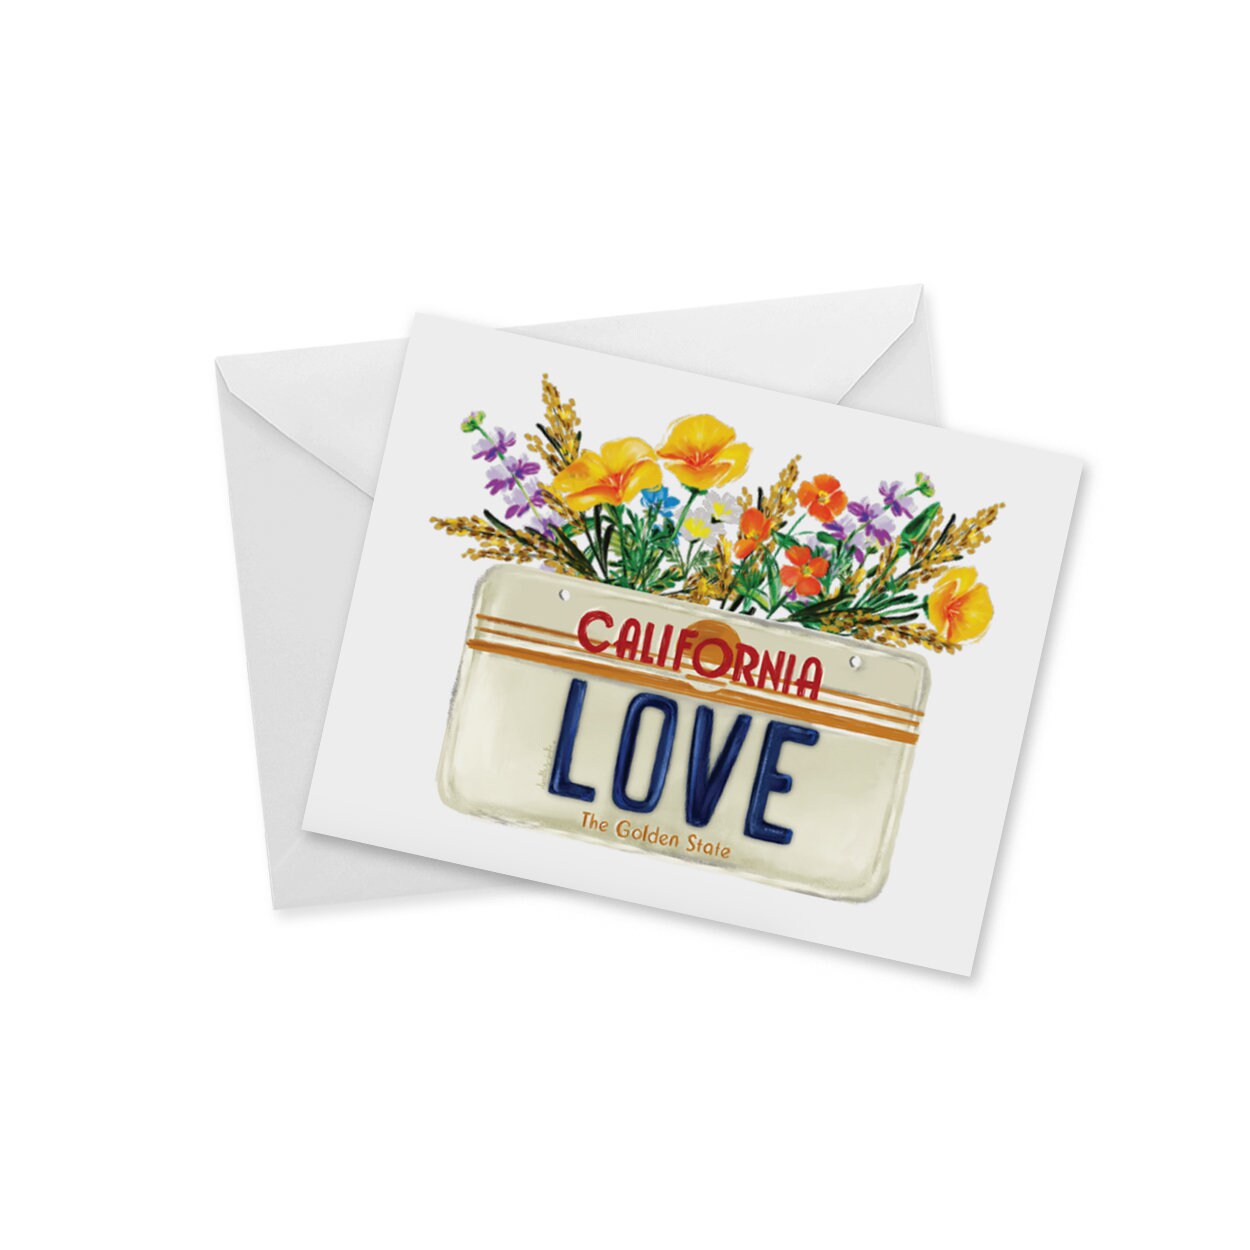 California Love California License Plate Notecard